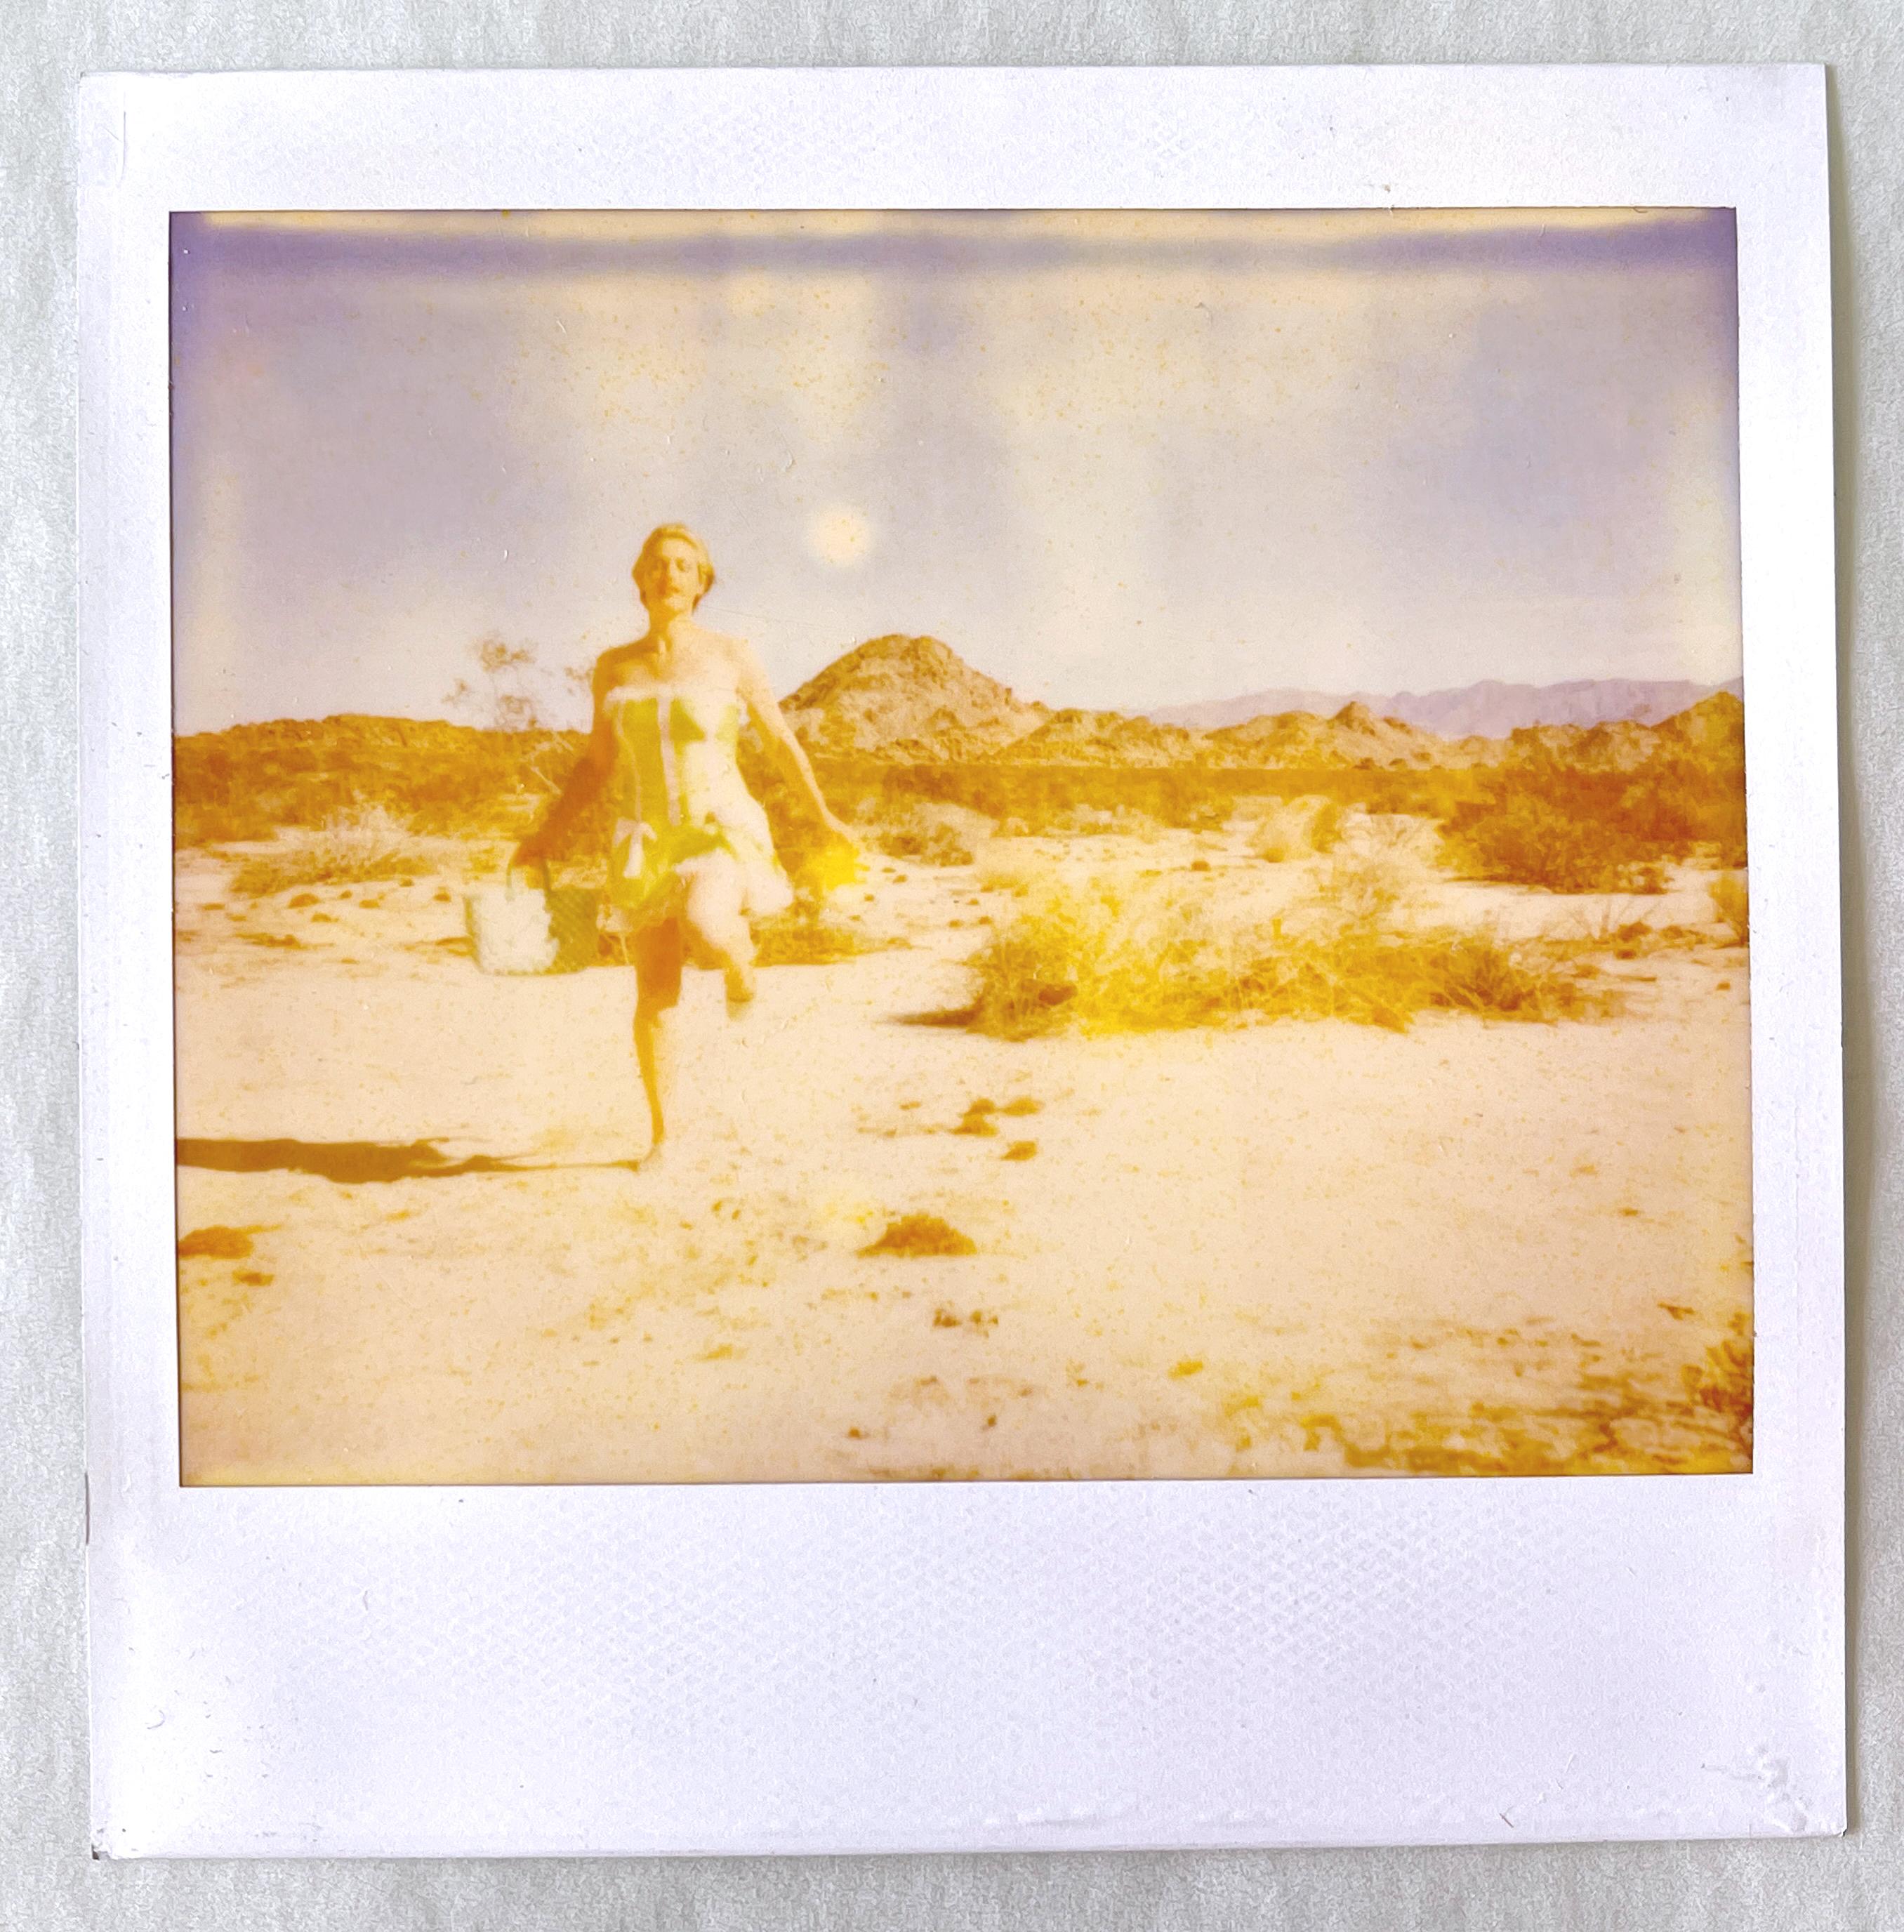 Stefanie Schneider Color Photograph - The Sound of Music (29 Palms, CA) - Original Polaroid Unique Piece